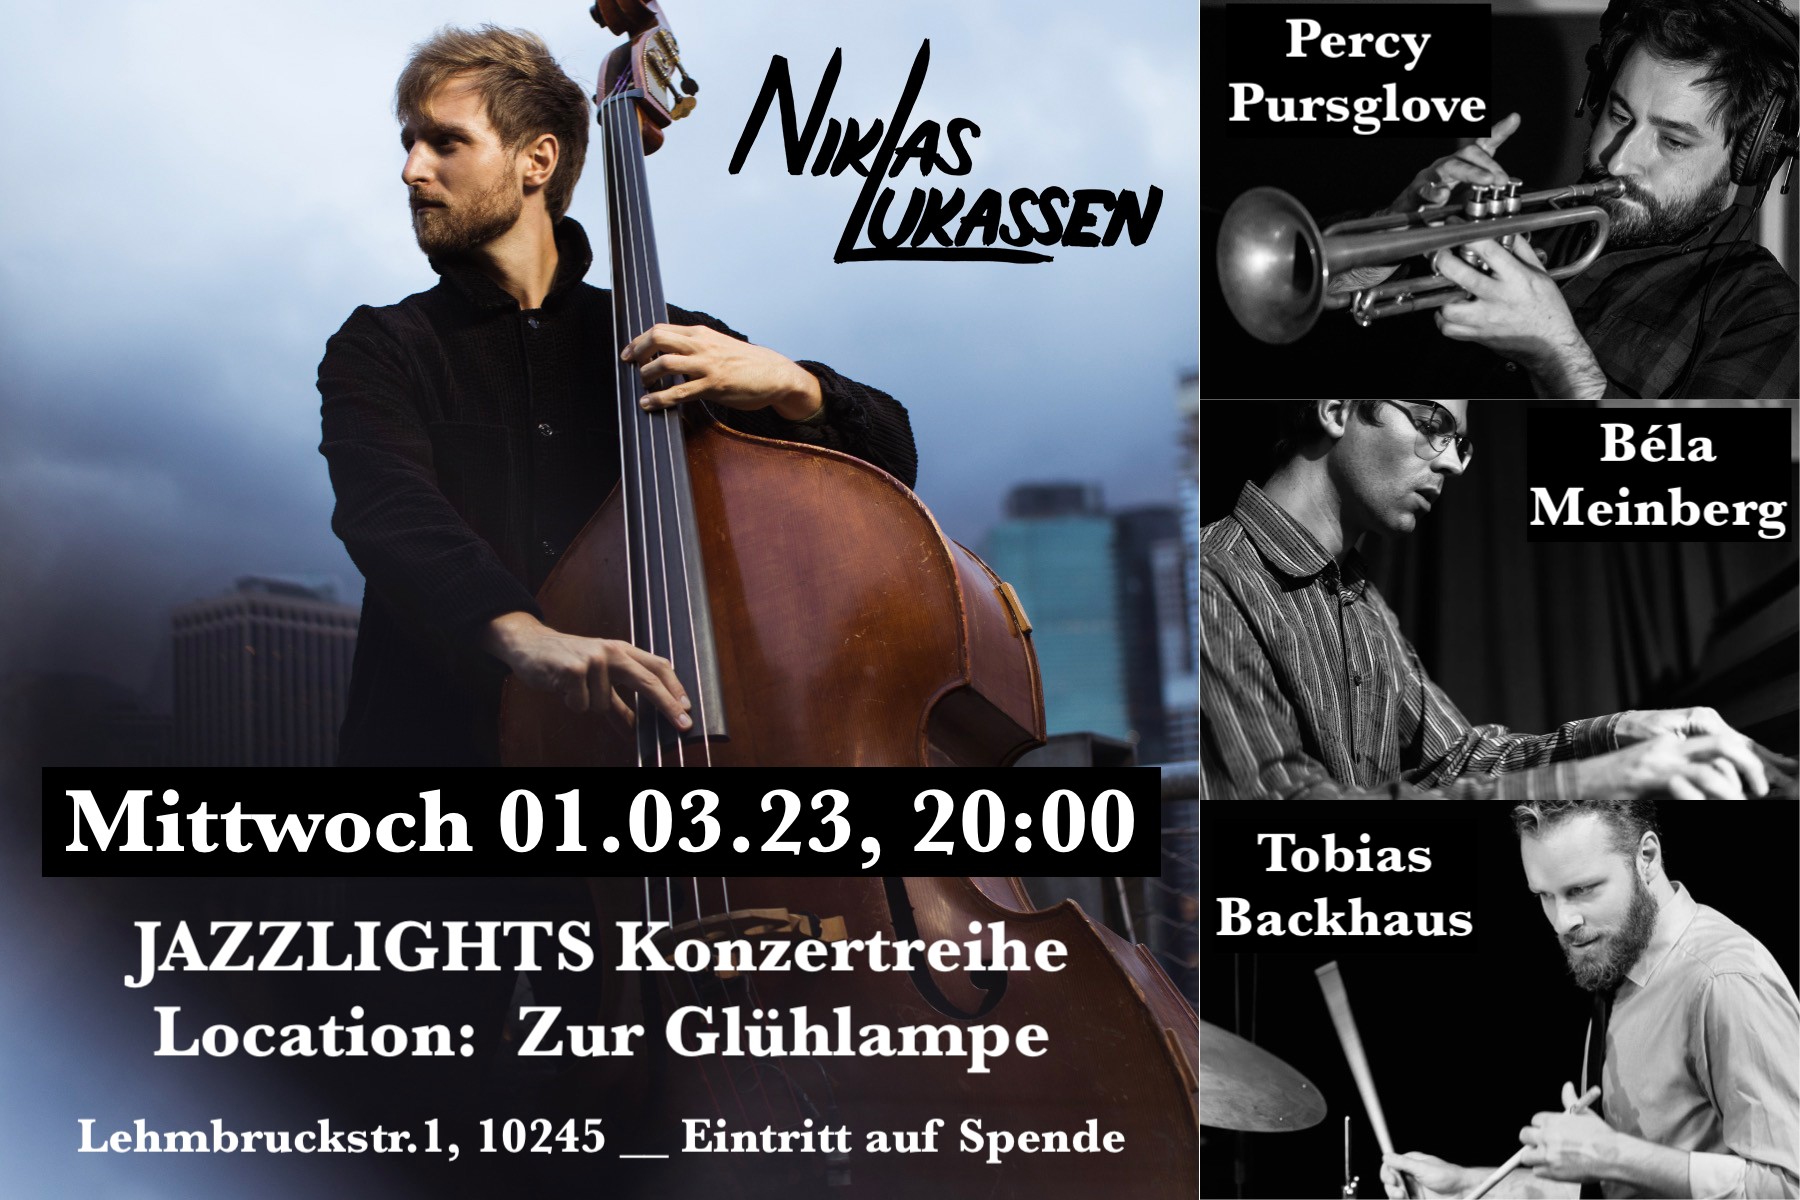 You are currently viewing Jazzlights #14 Niklas Lukassen @ Zur Glühlampe